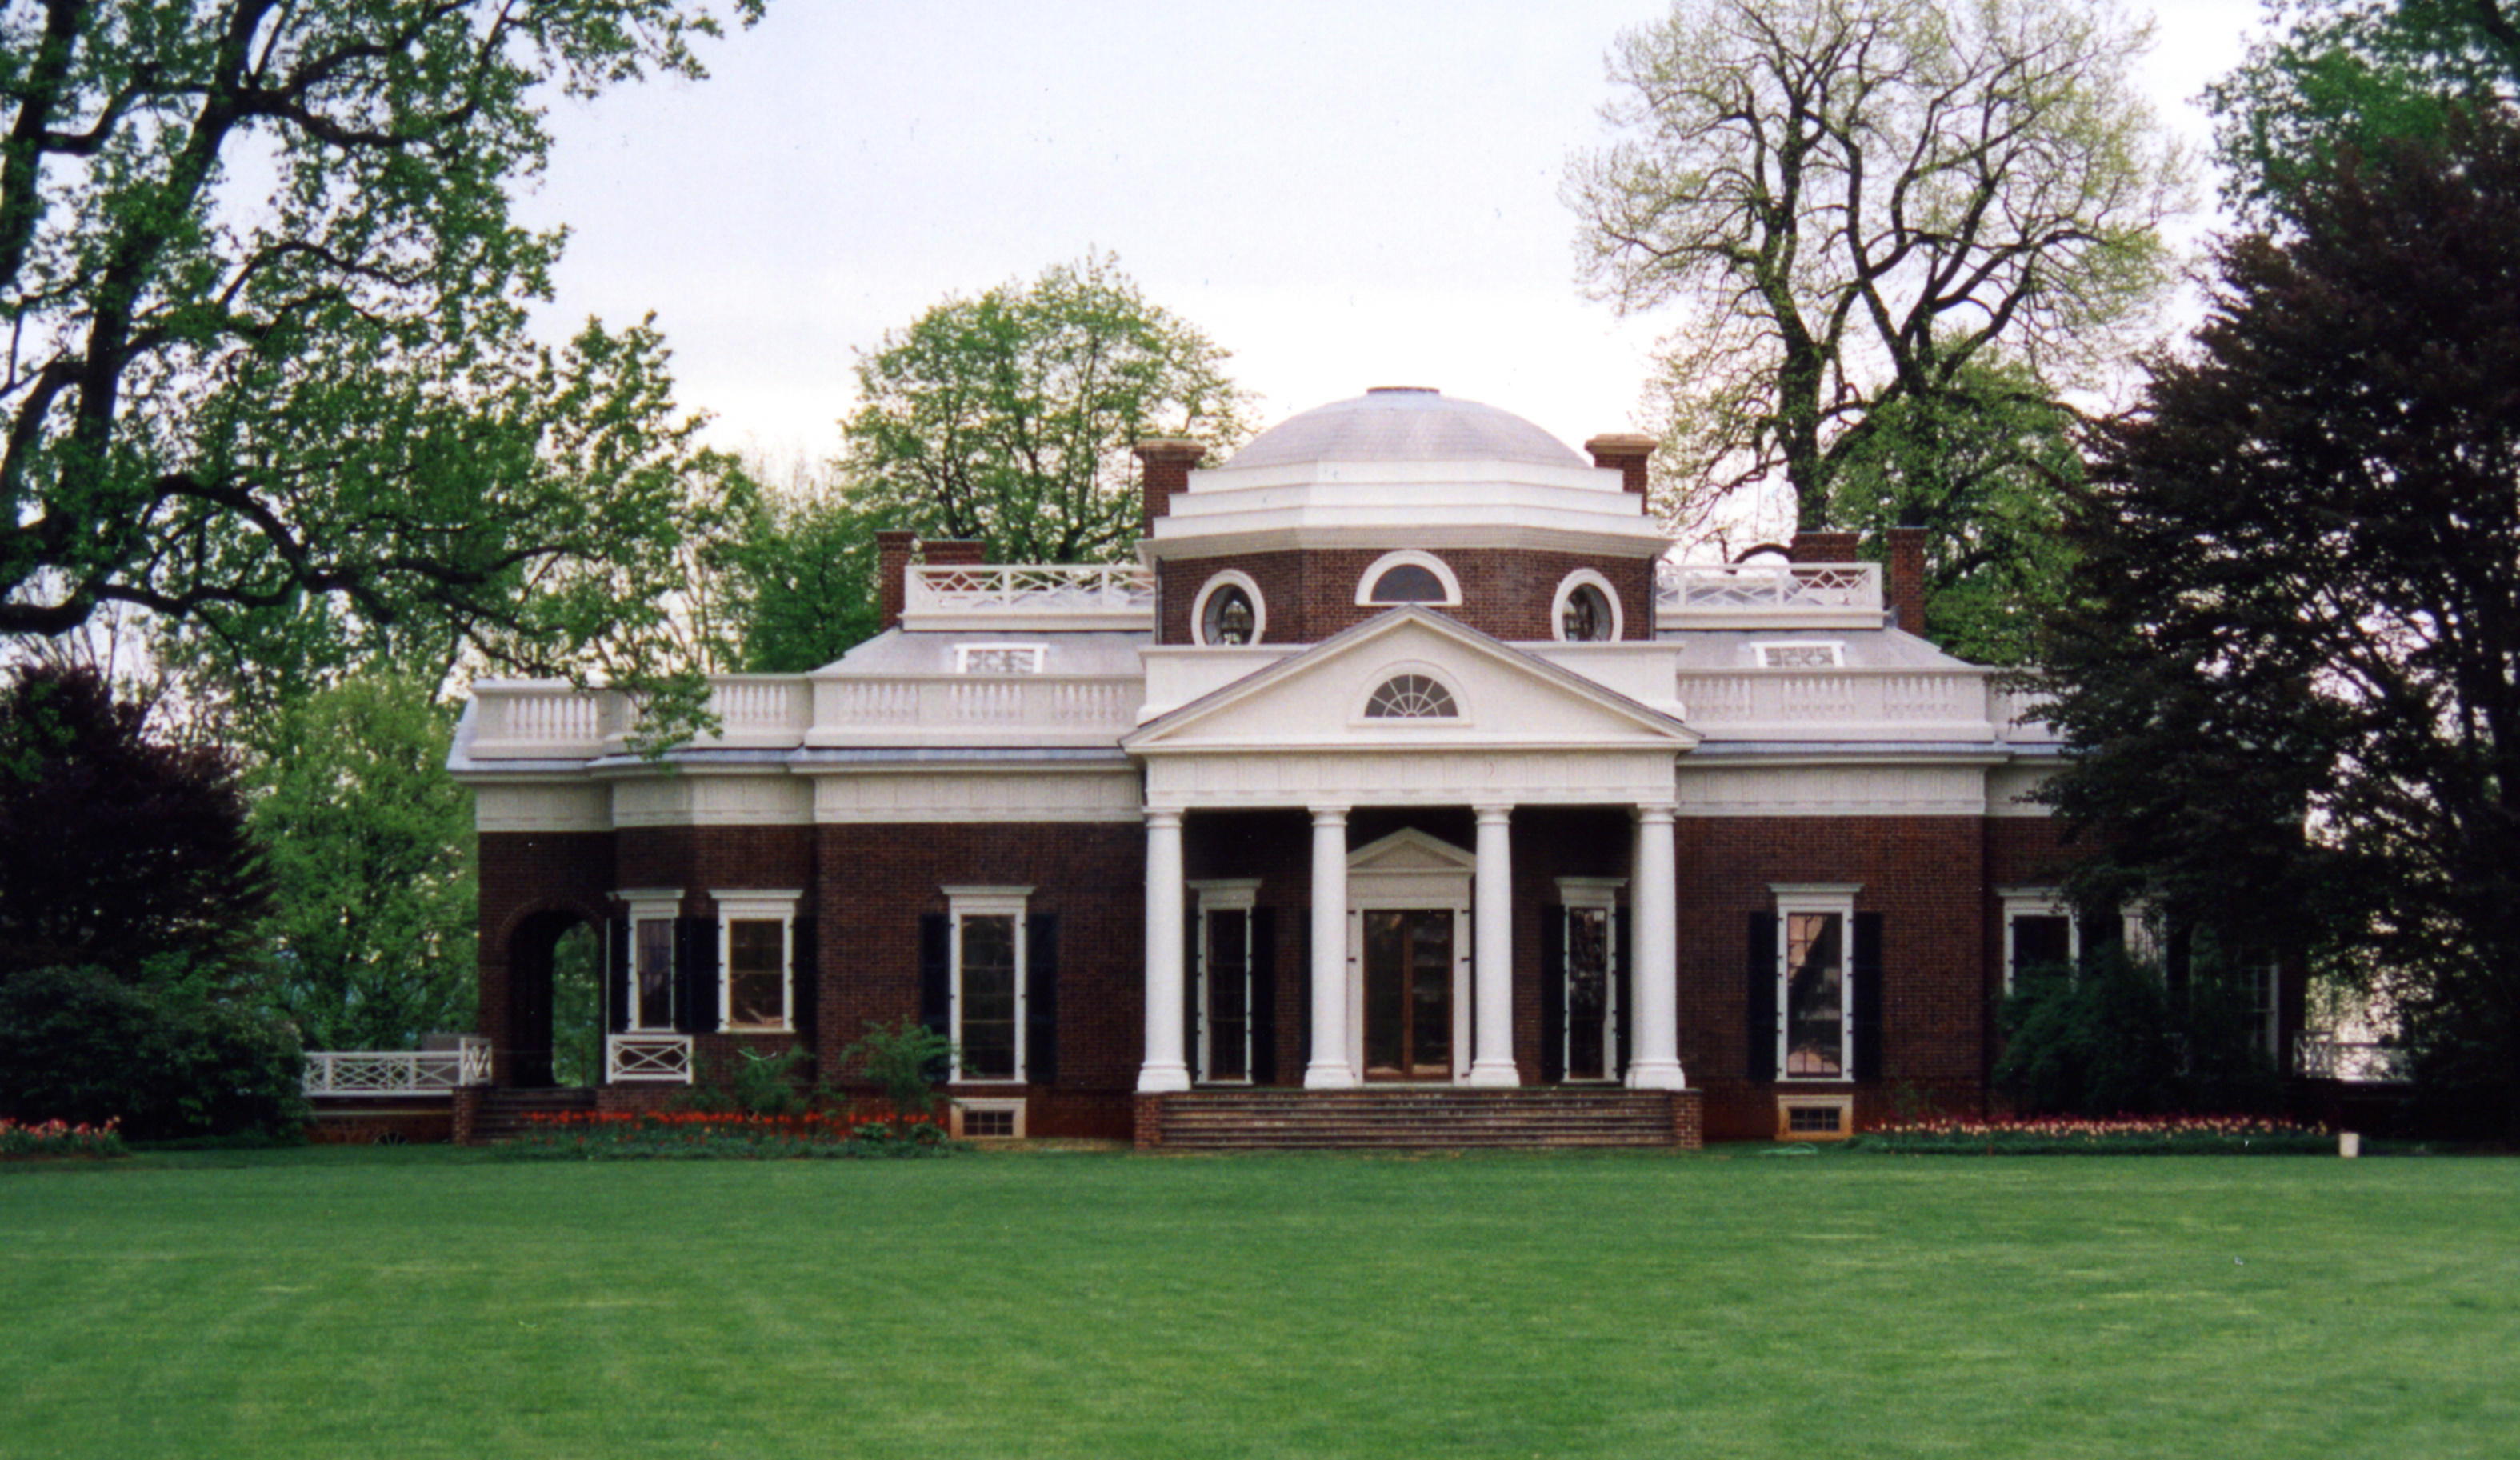 Monticello, Virginia. Bolig for USA's tredje præsident, Thomas Jefferson.